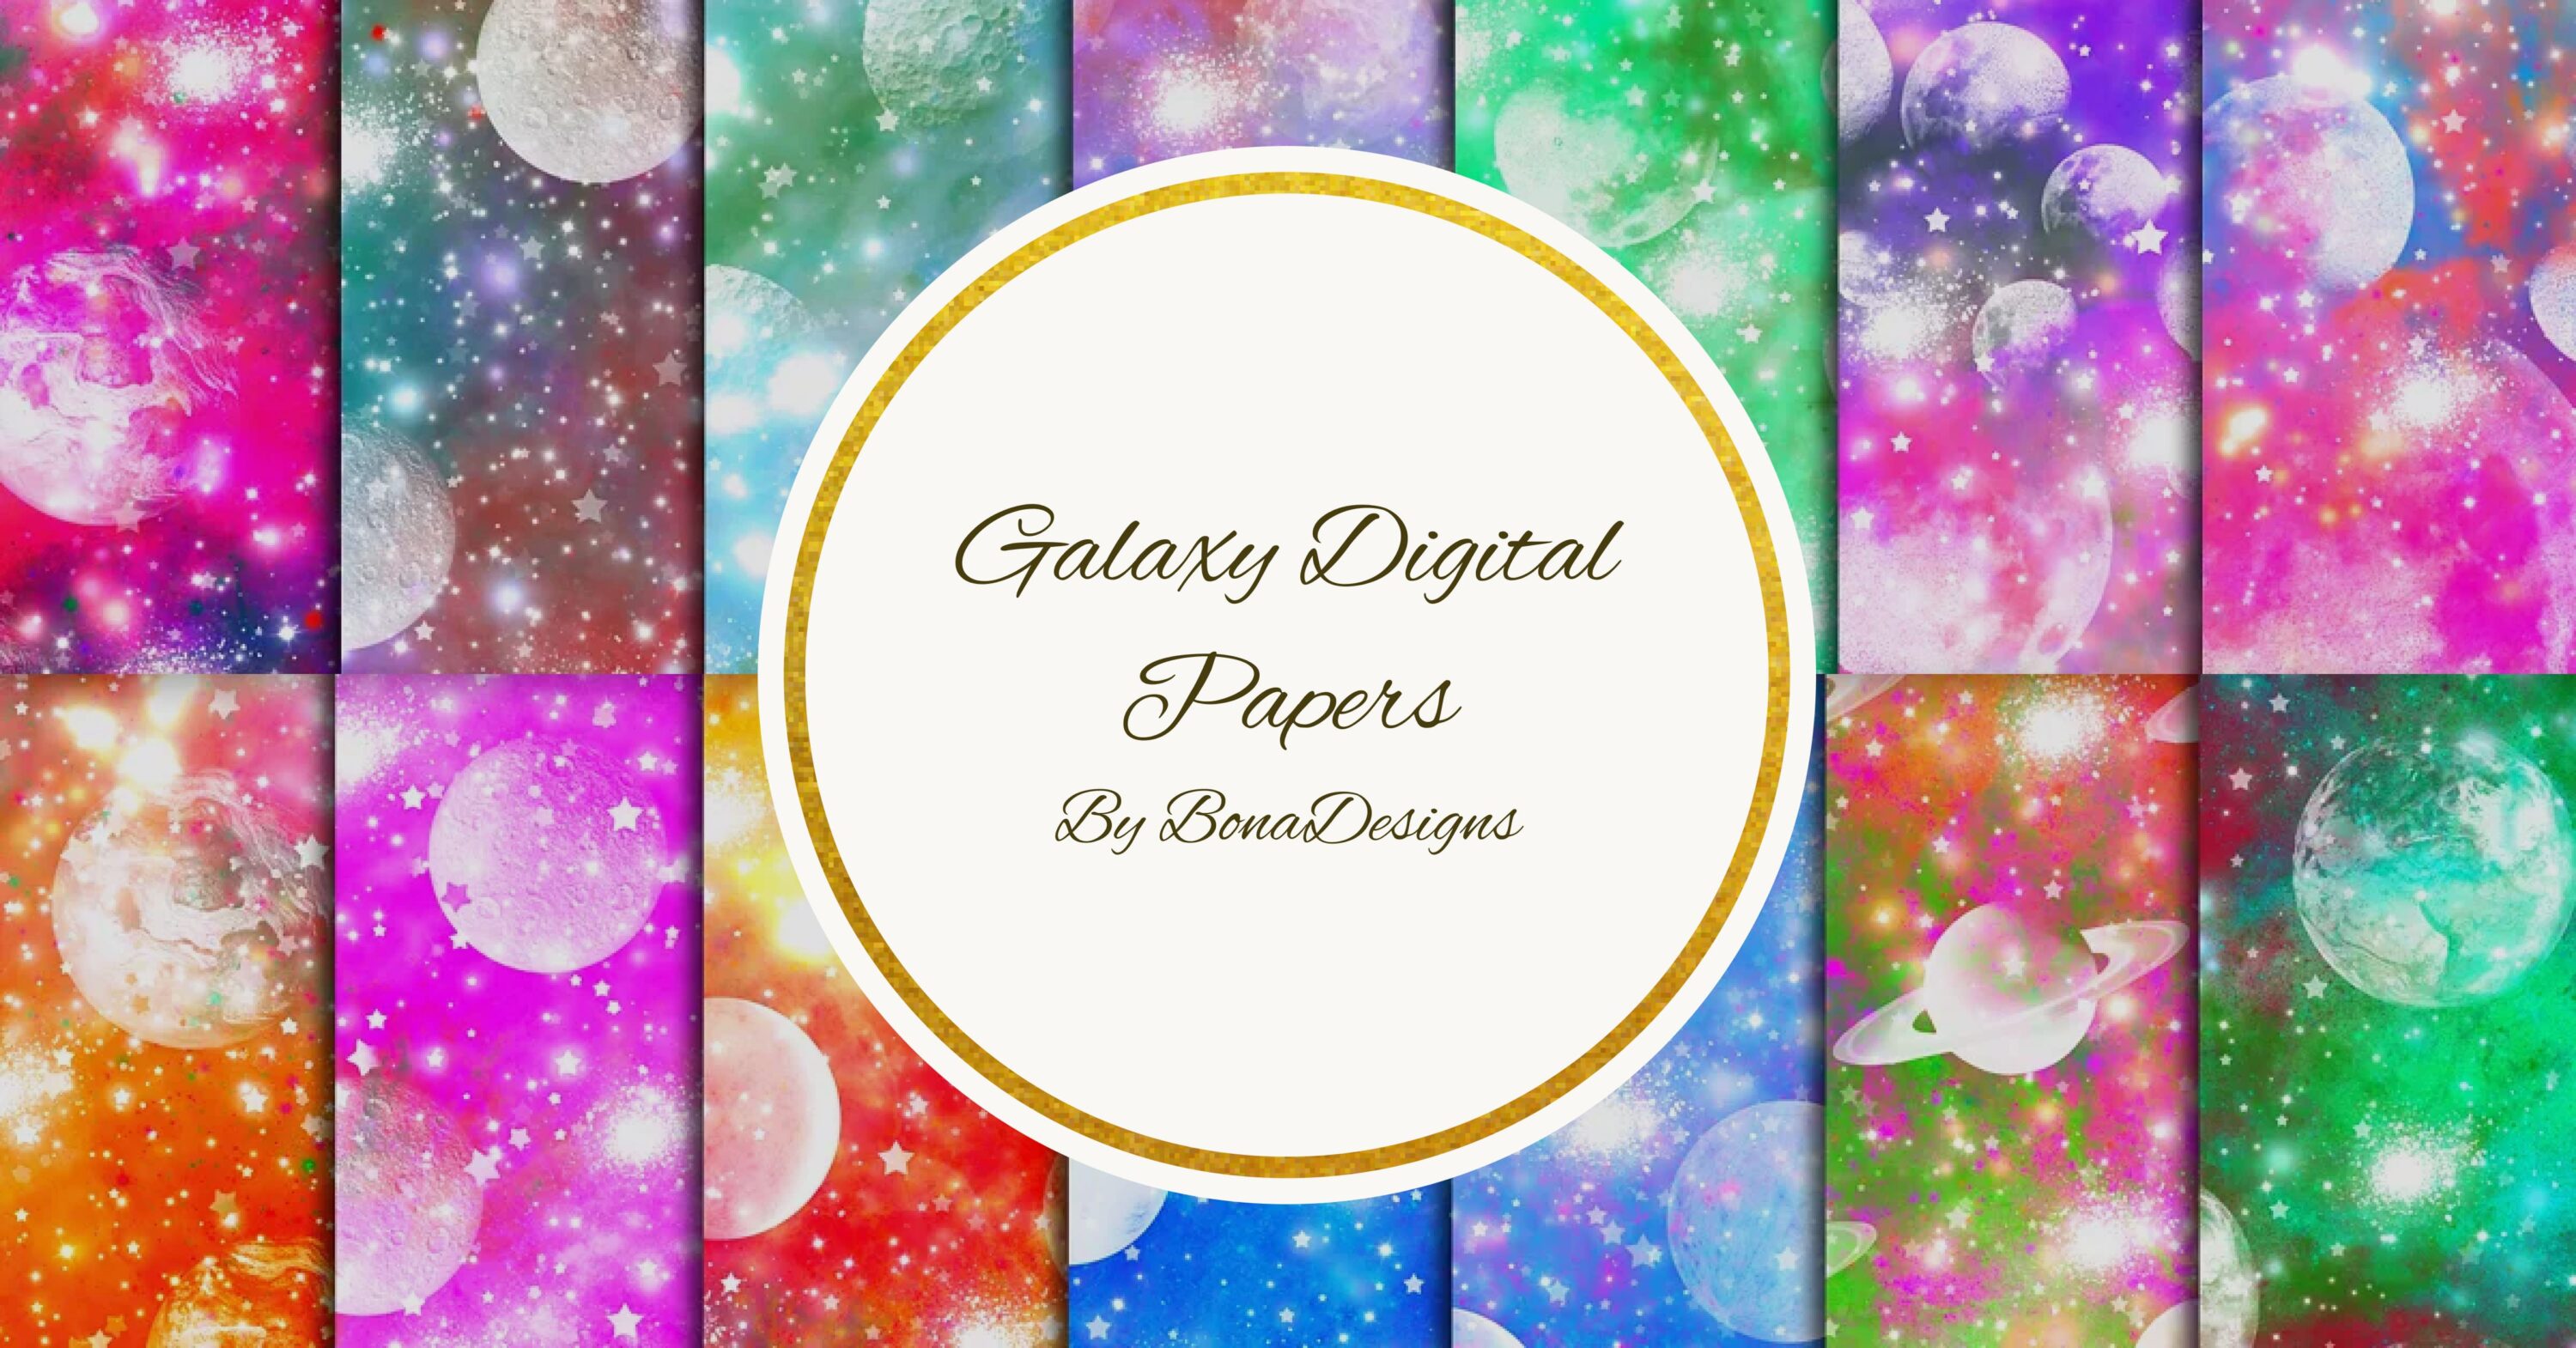 Galaxy Digital Papers Set facebook image.